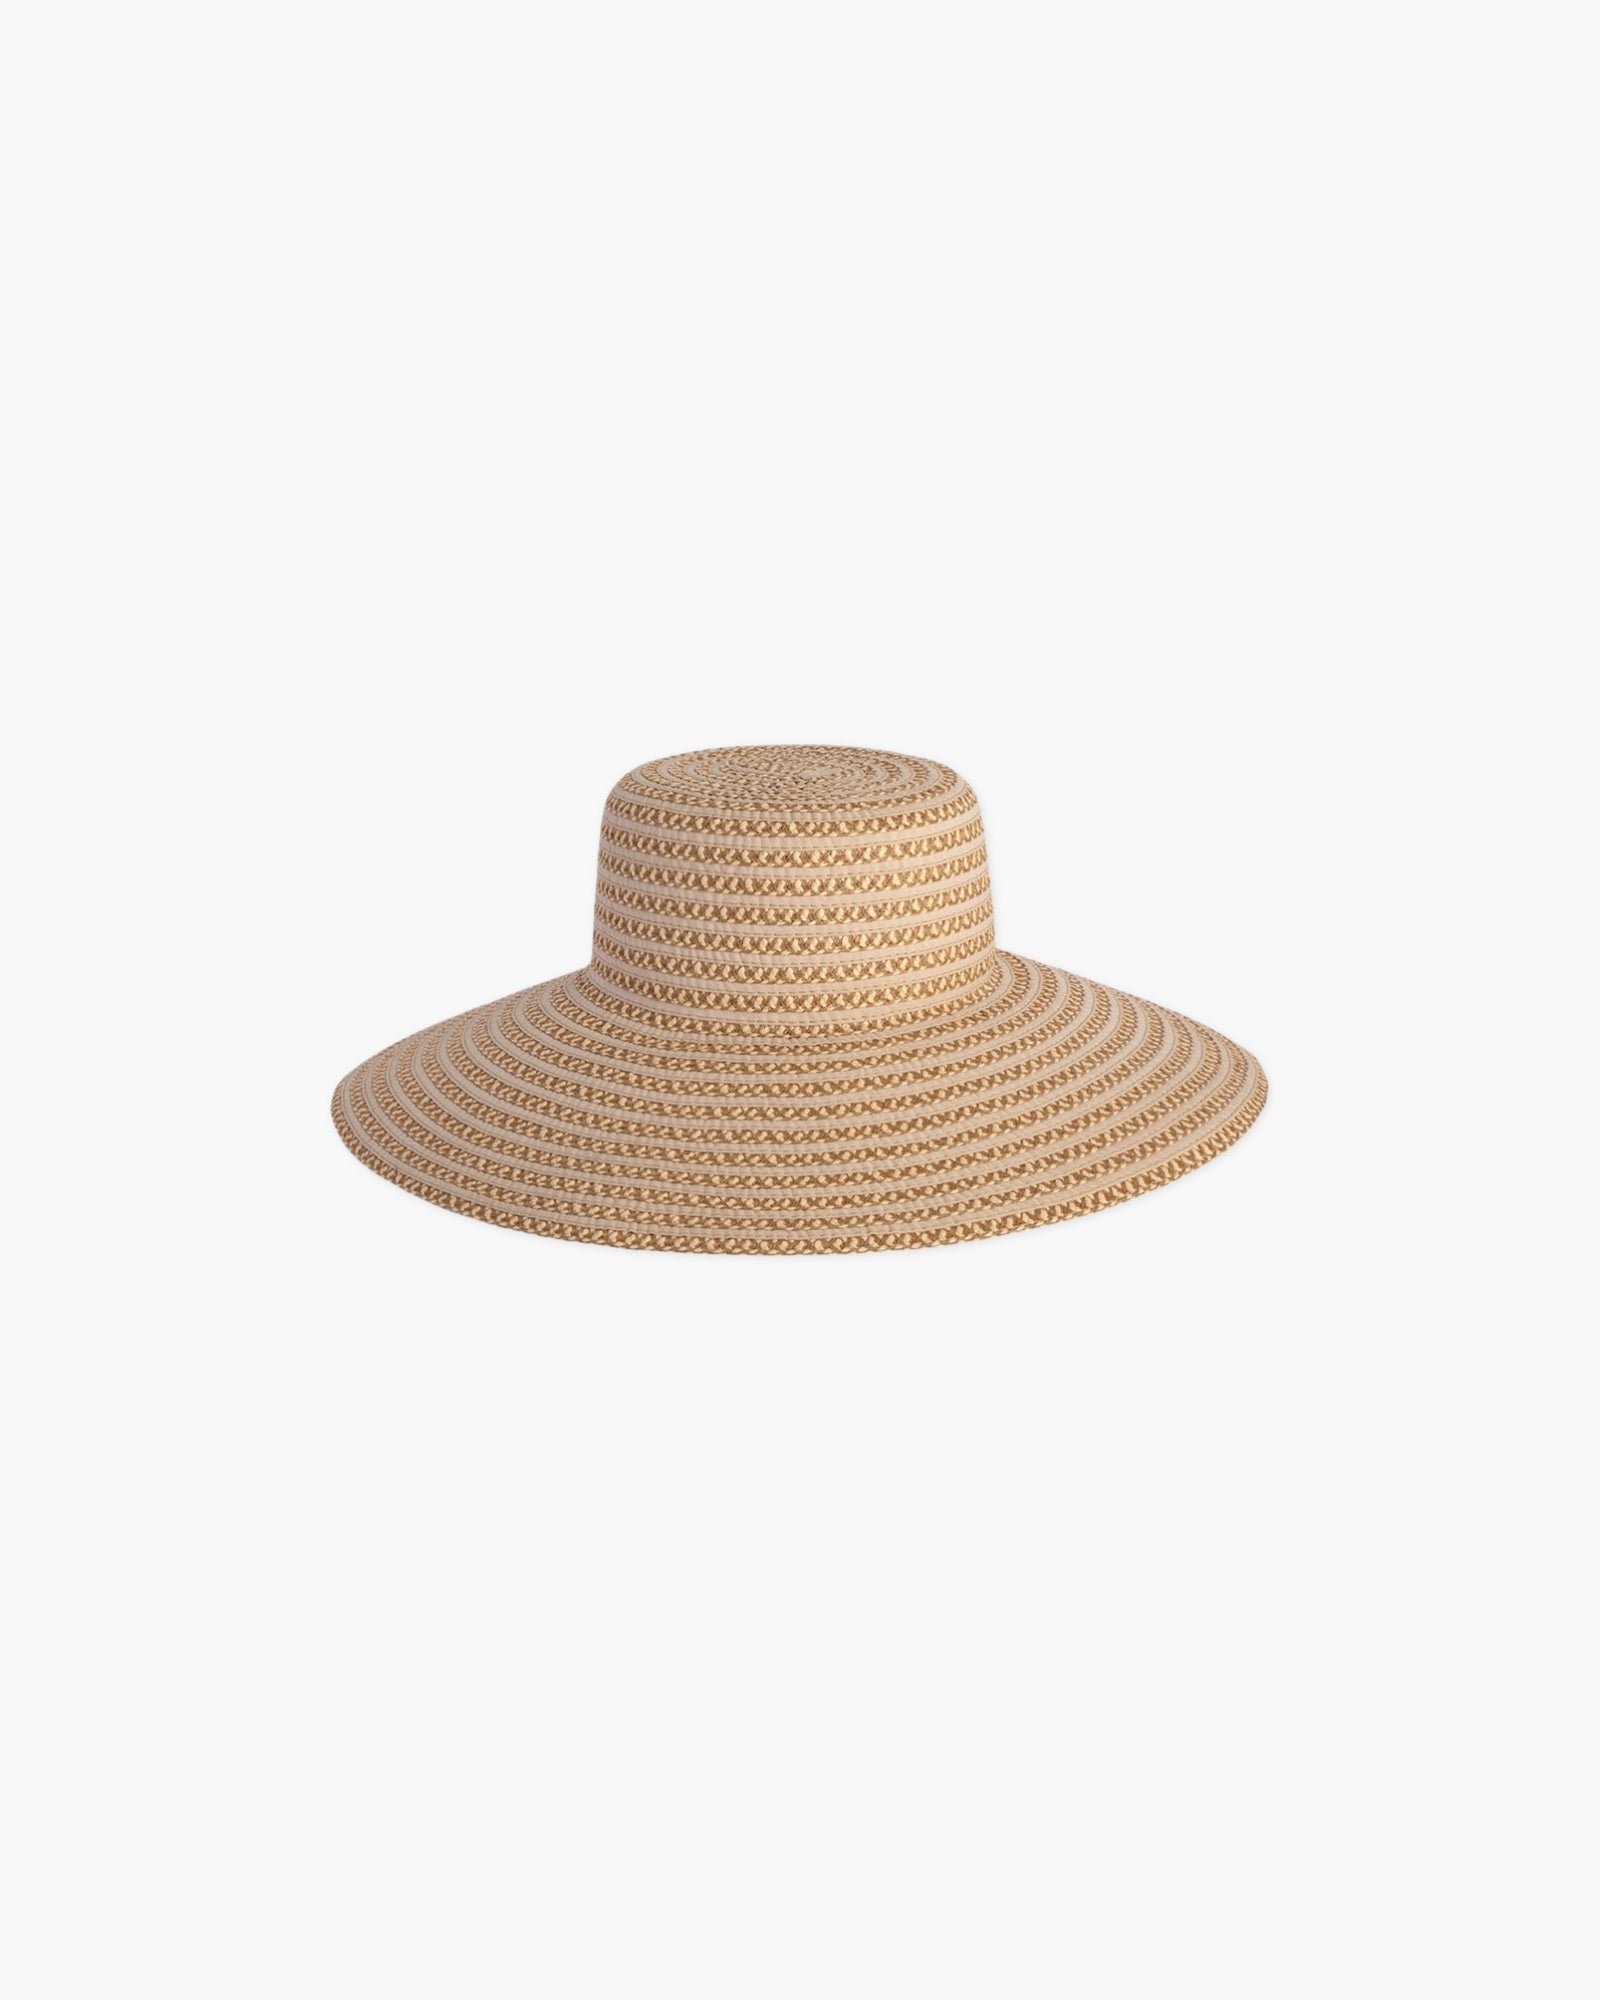 Margot Straw Hat | Women's Sun Hat for Sale | Eric Javits | Peanut ...